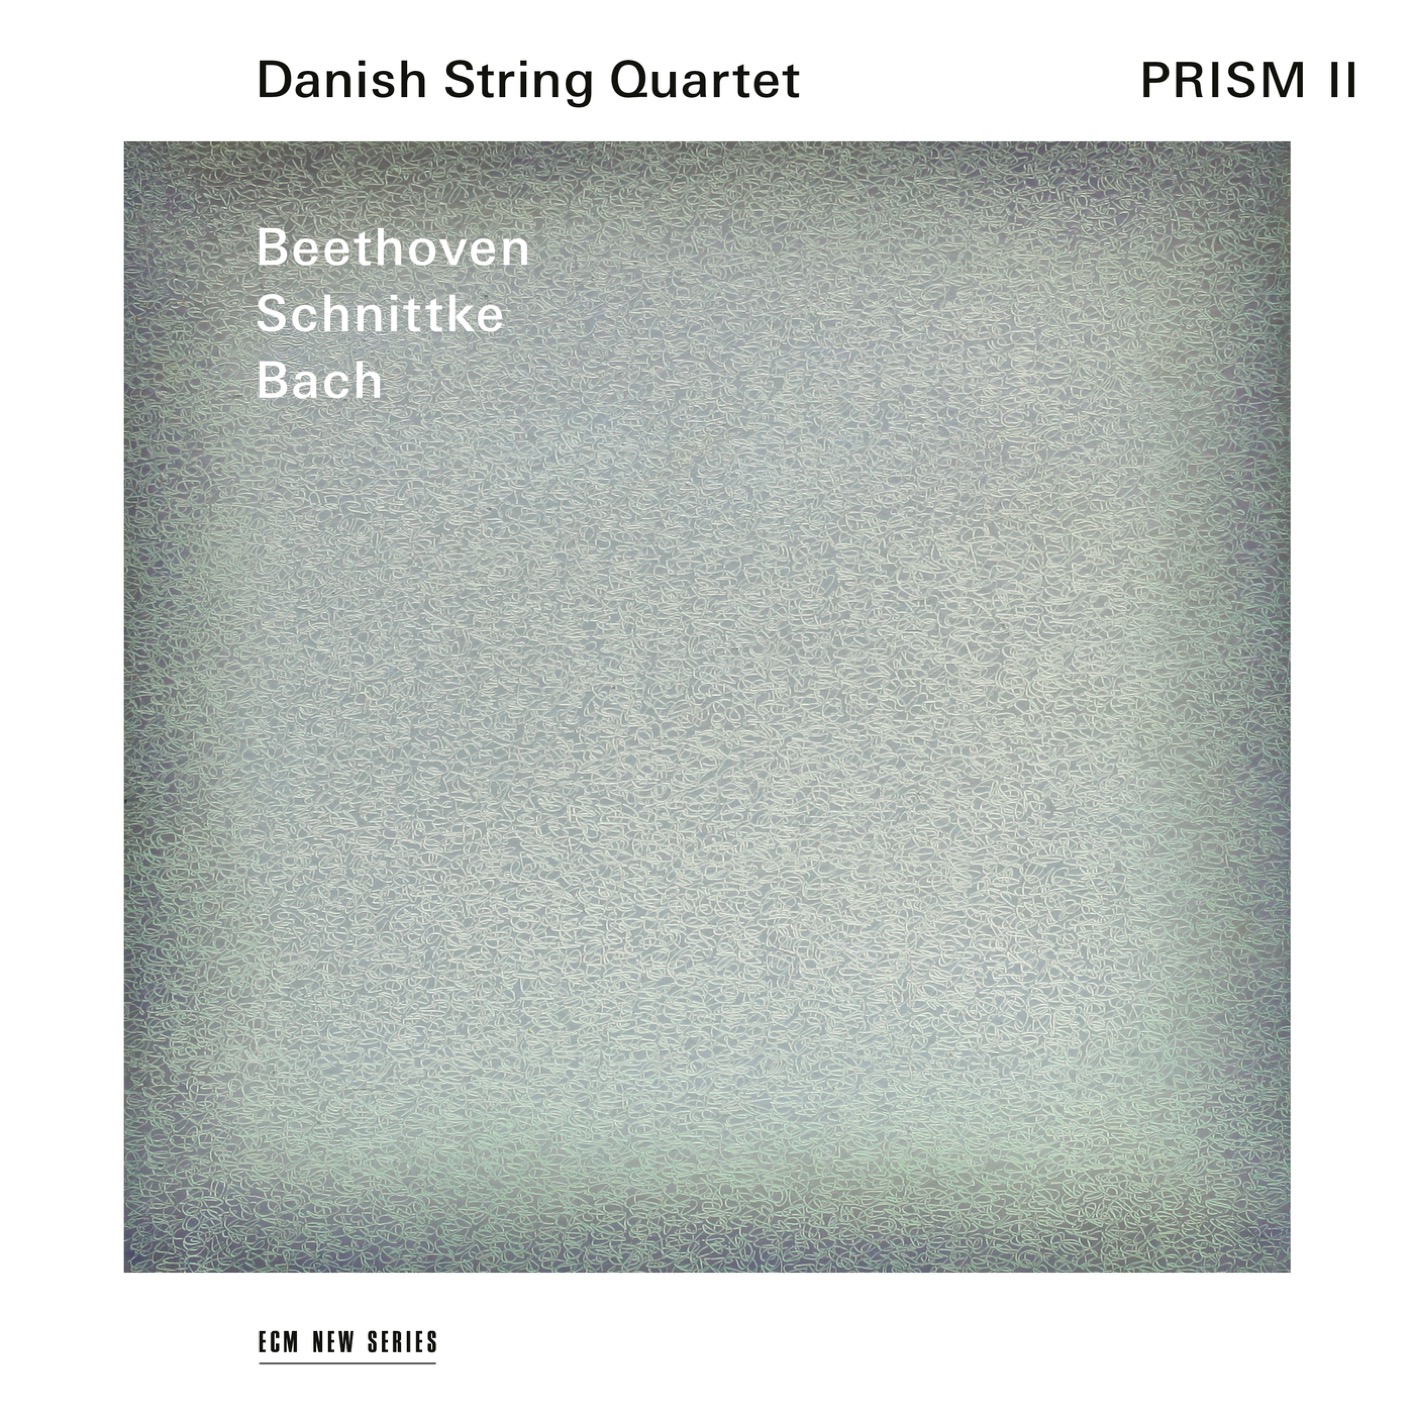 Danish String Quartet - Prism II (2019) [FLAC 24bit/96kHz]